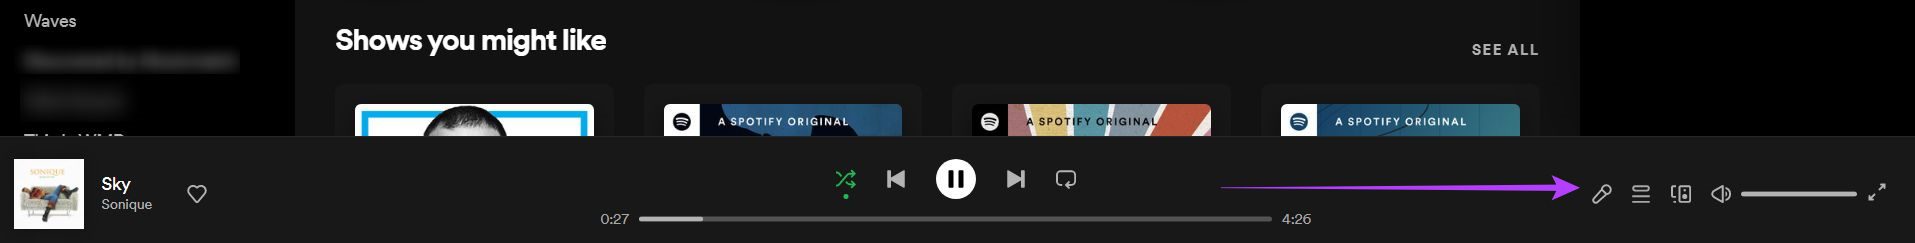 How to view lyrics on Spotify in desktop